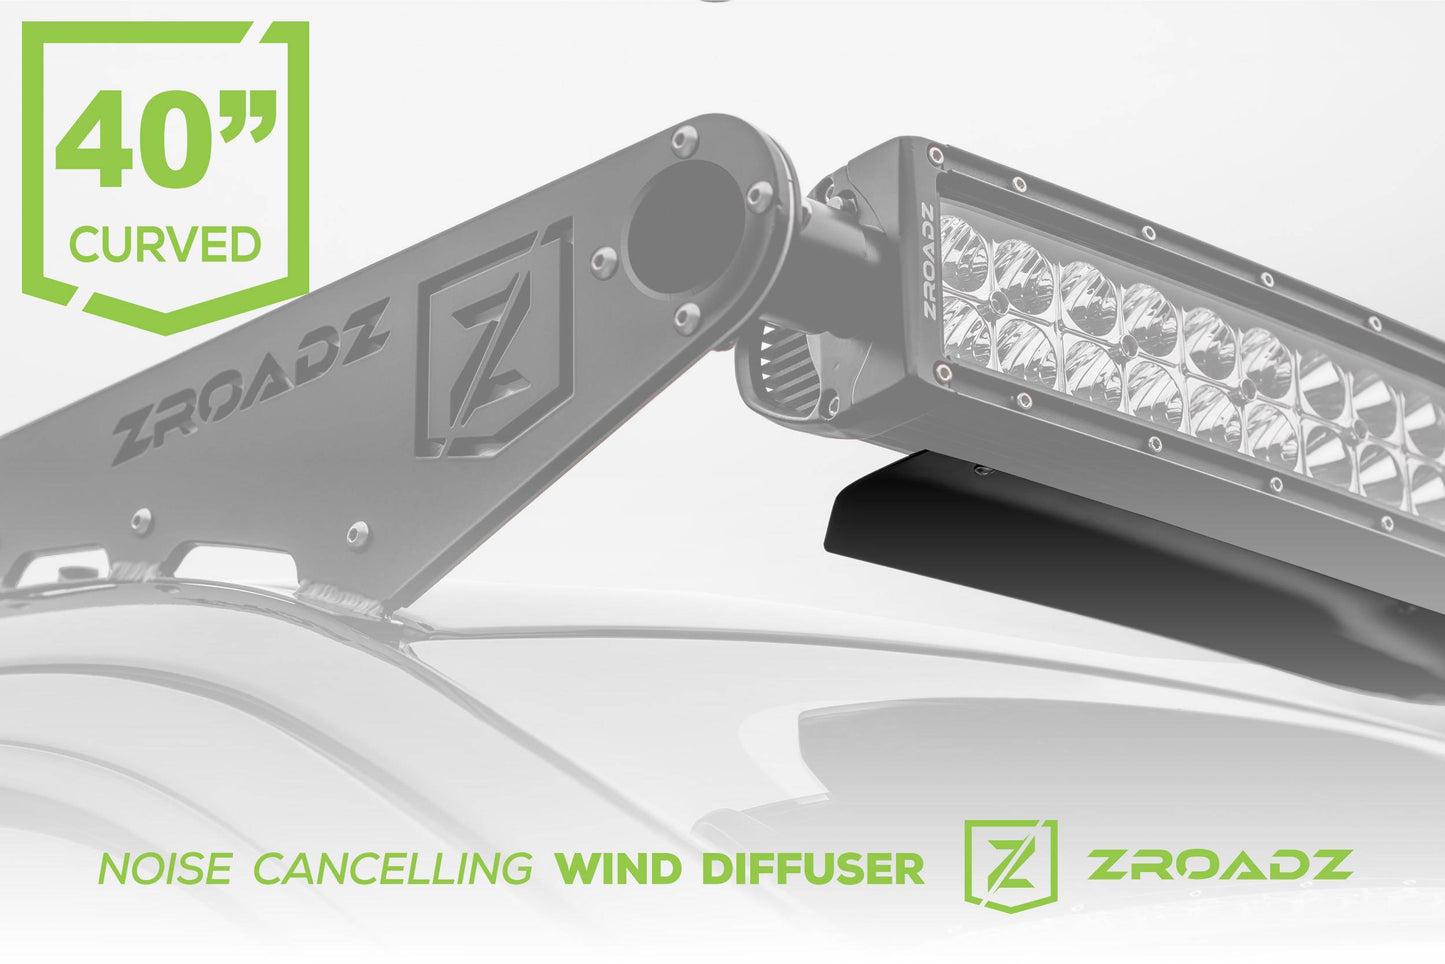 ZROADZ Z330040C Black Aluminum Noise Cancelling Wind Diffuser Fits 2015-2020 Chevrolet Colorado